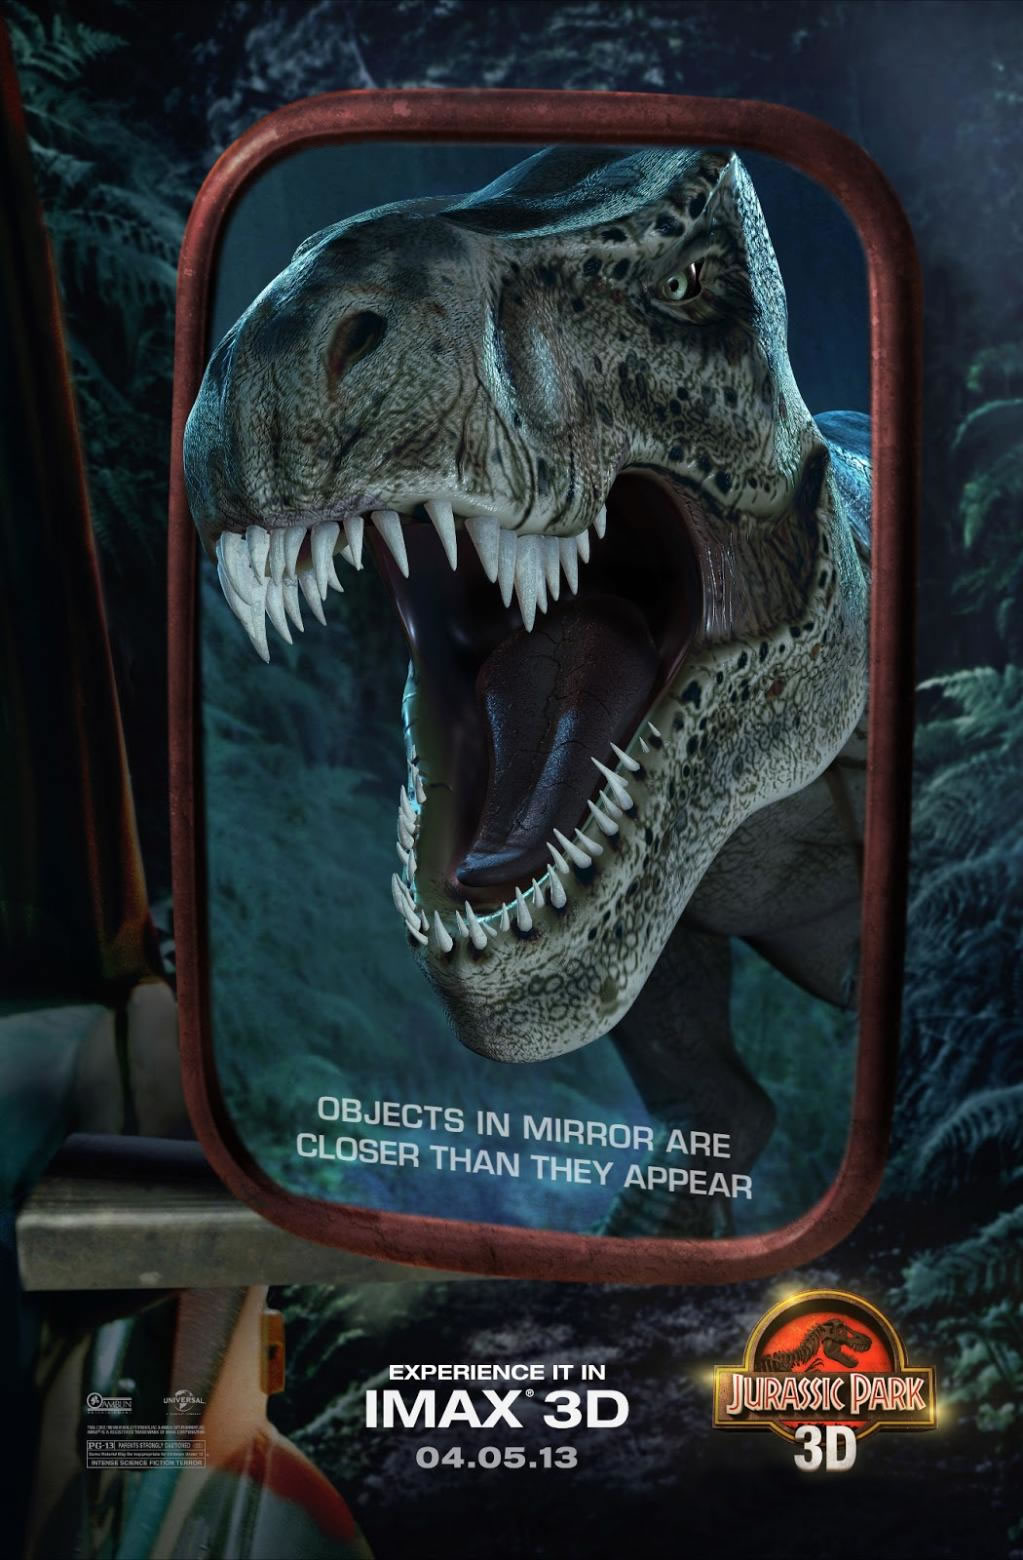 Jurassic Park IMAX 3D